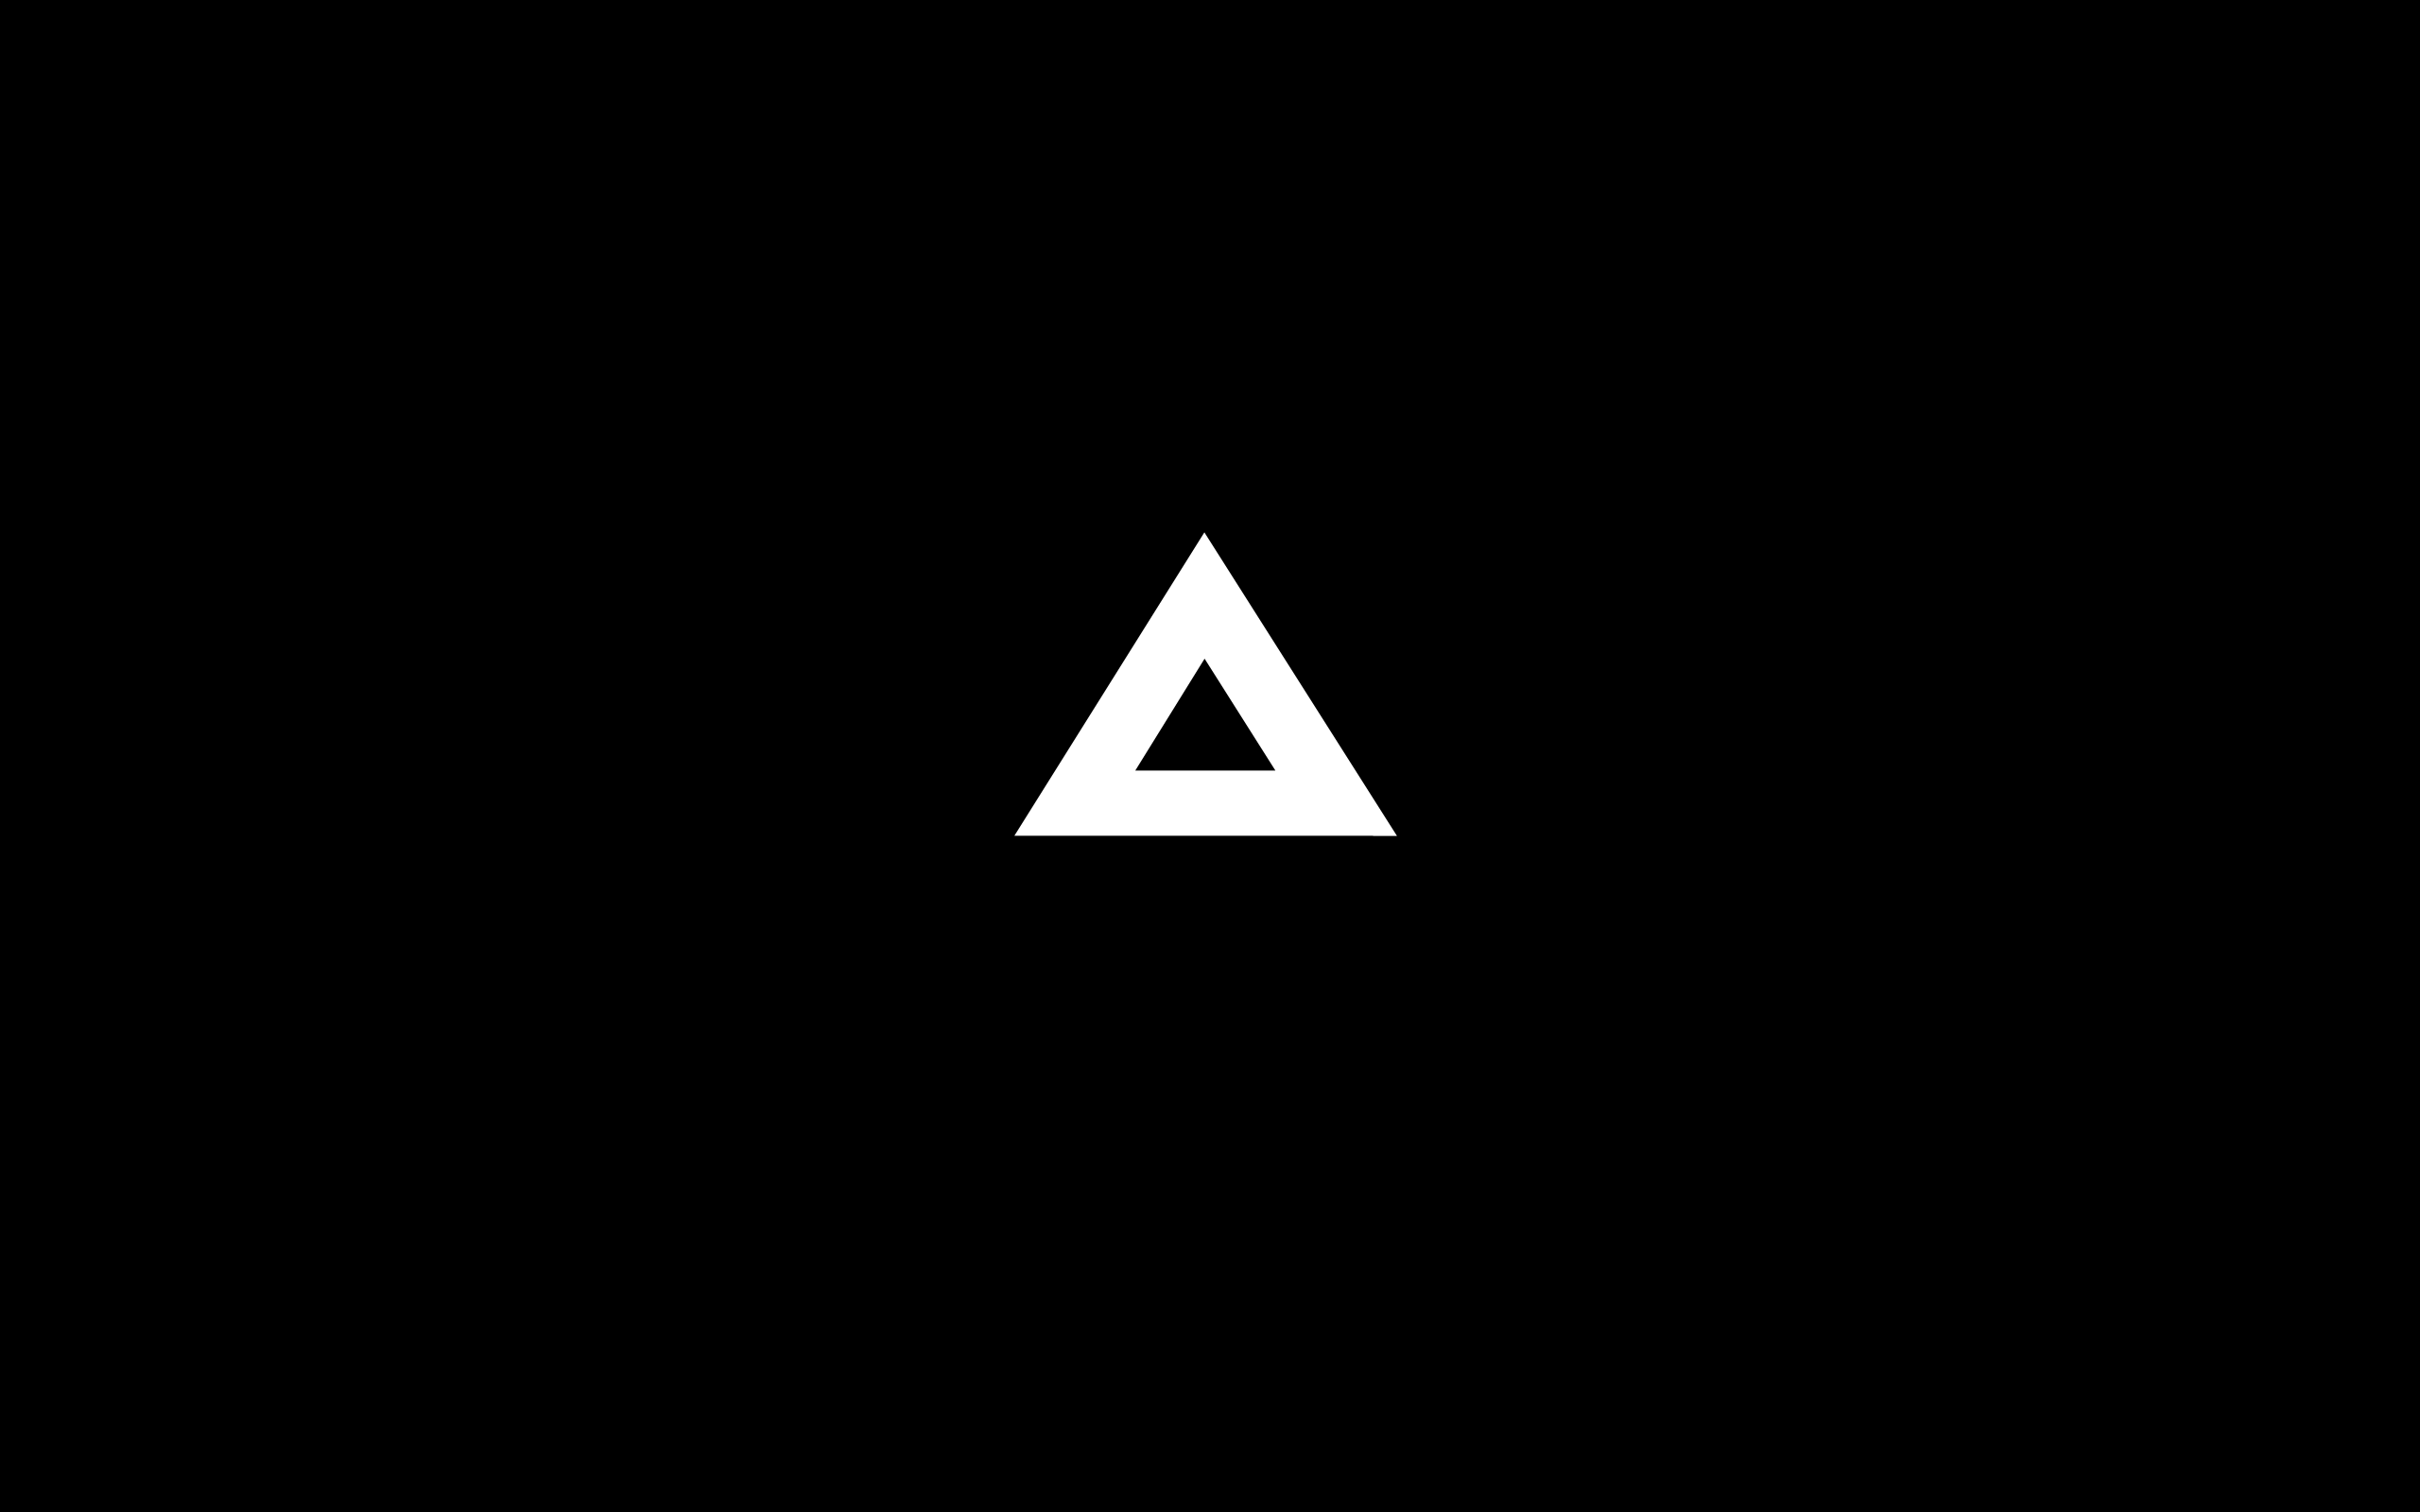 General 2560x1600 minimalism black triangle simple background